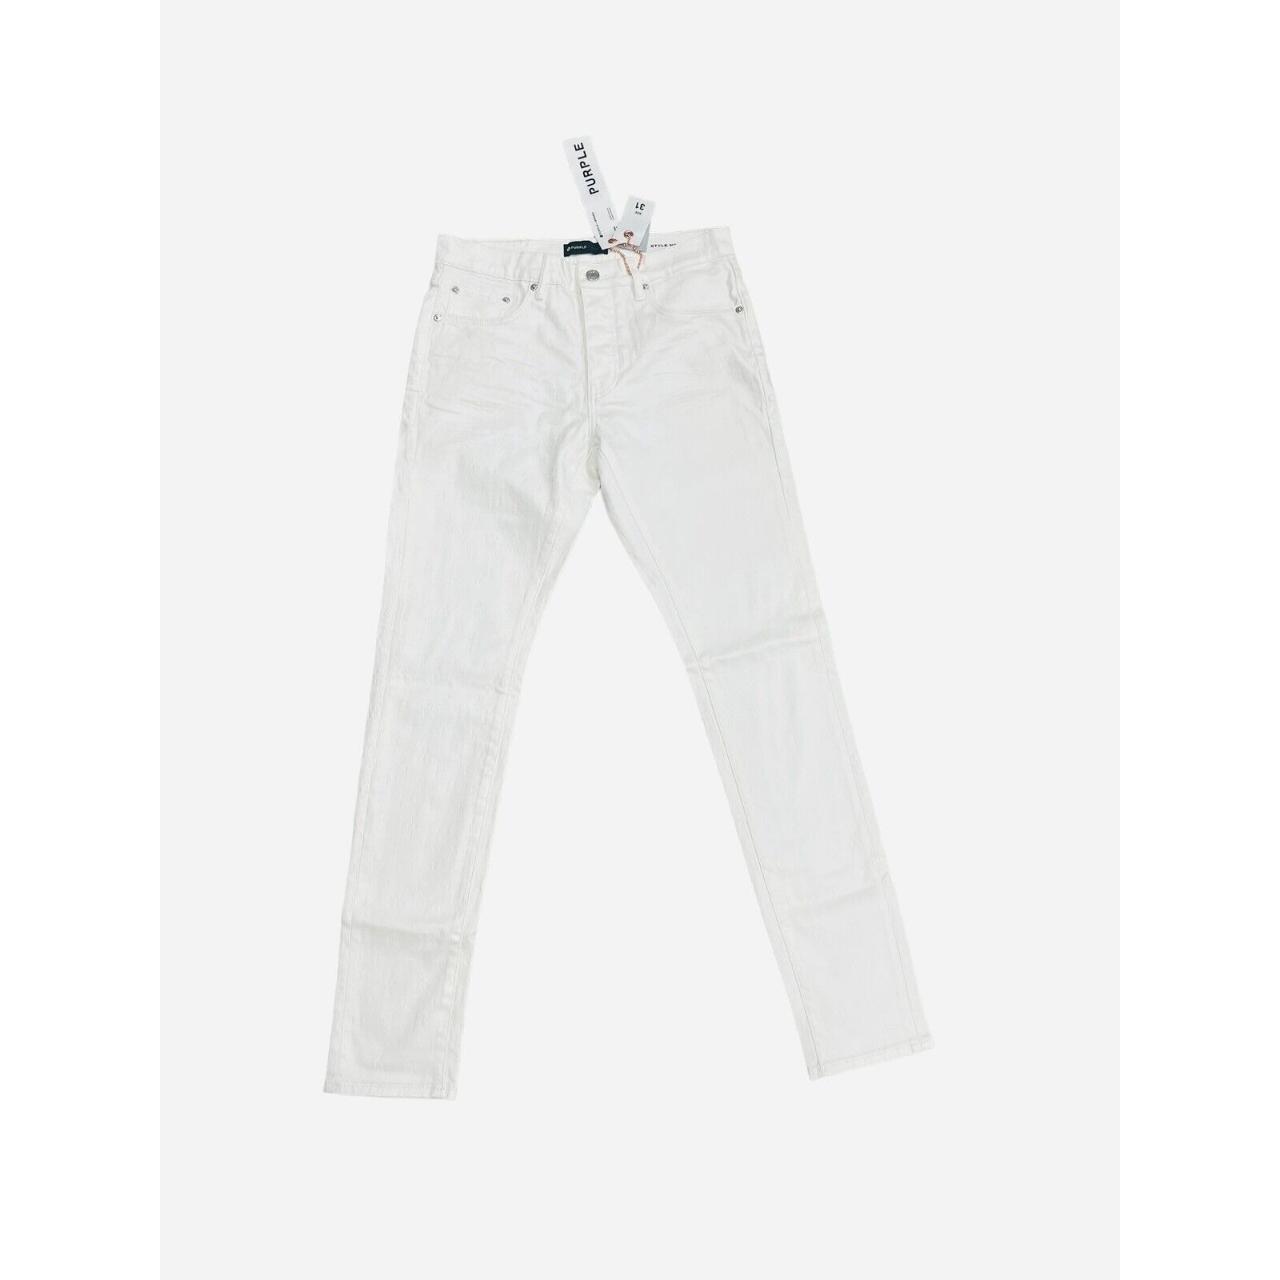 Men's Skinny Jeans - White - 31